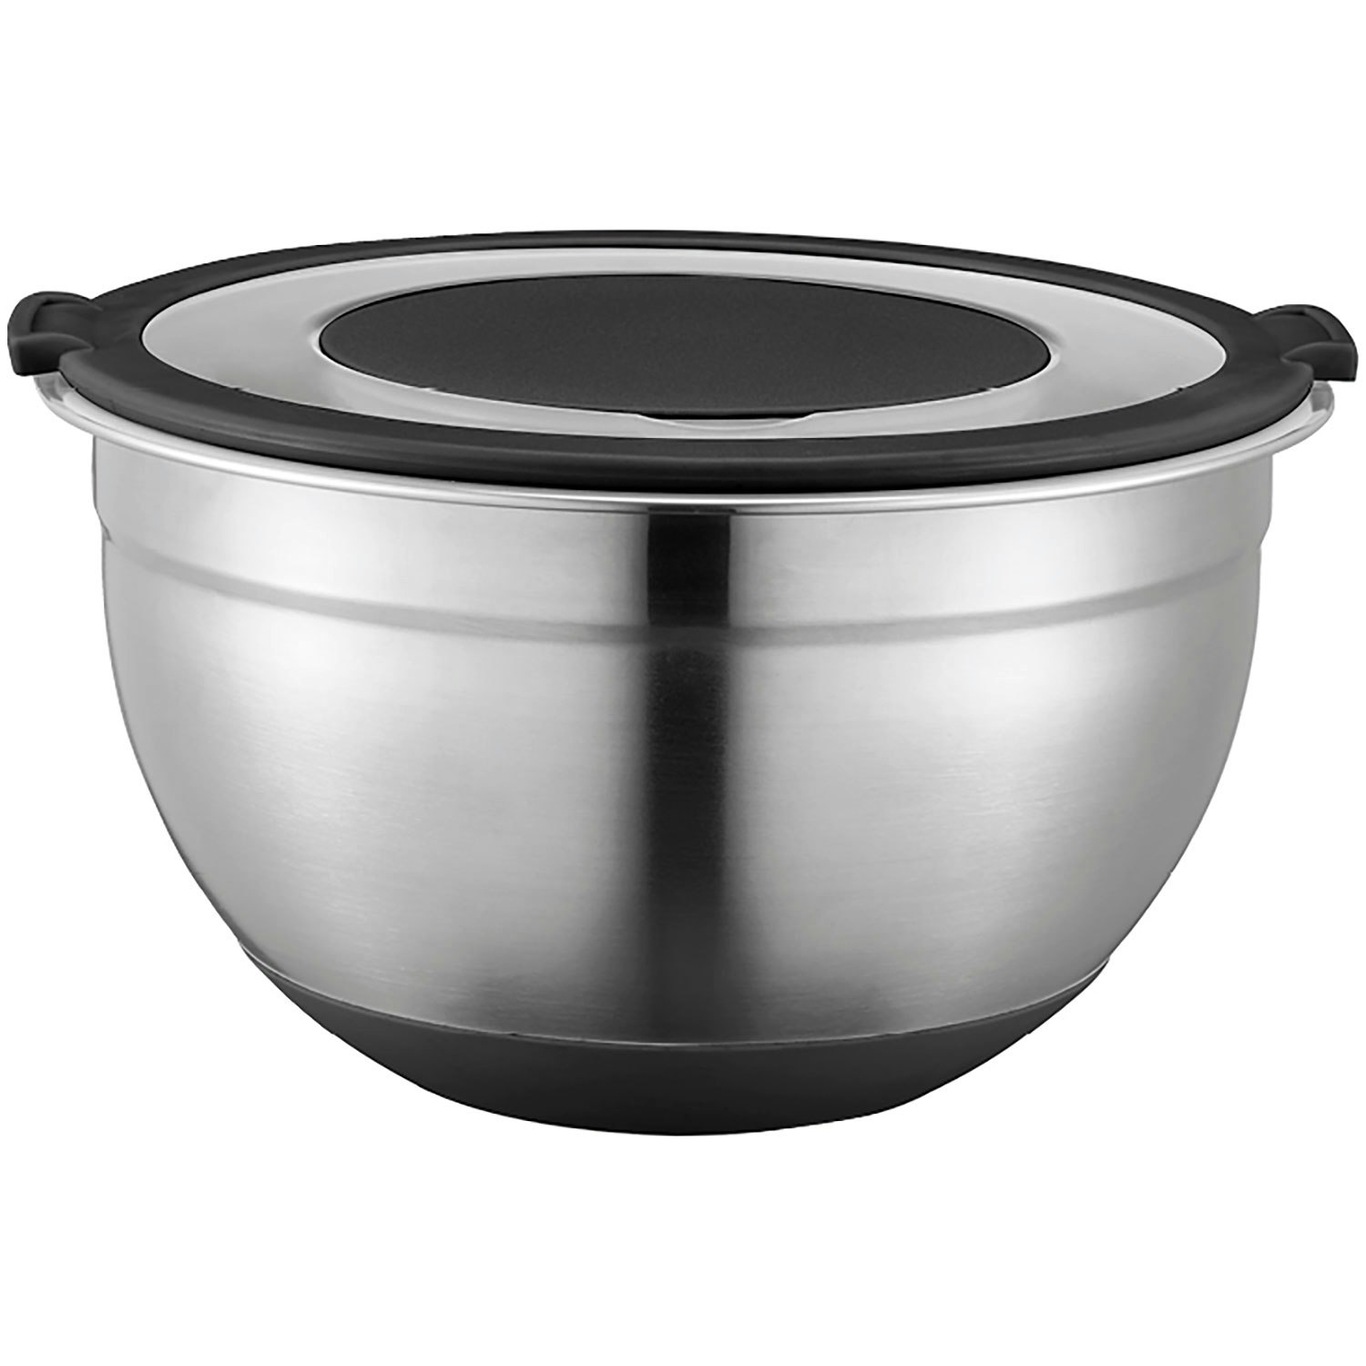 https://royaldesign.com/image/2/dorre-better-bowl-stainless-steel-w-lid-3-grater-1?w=800&quality=80